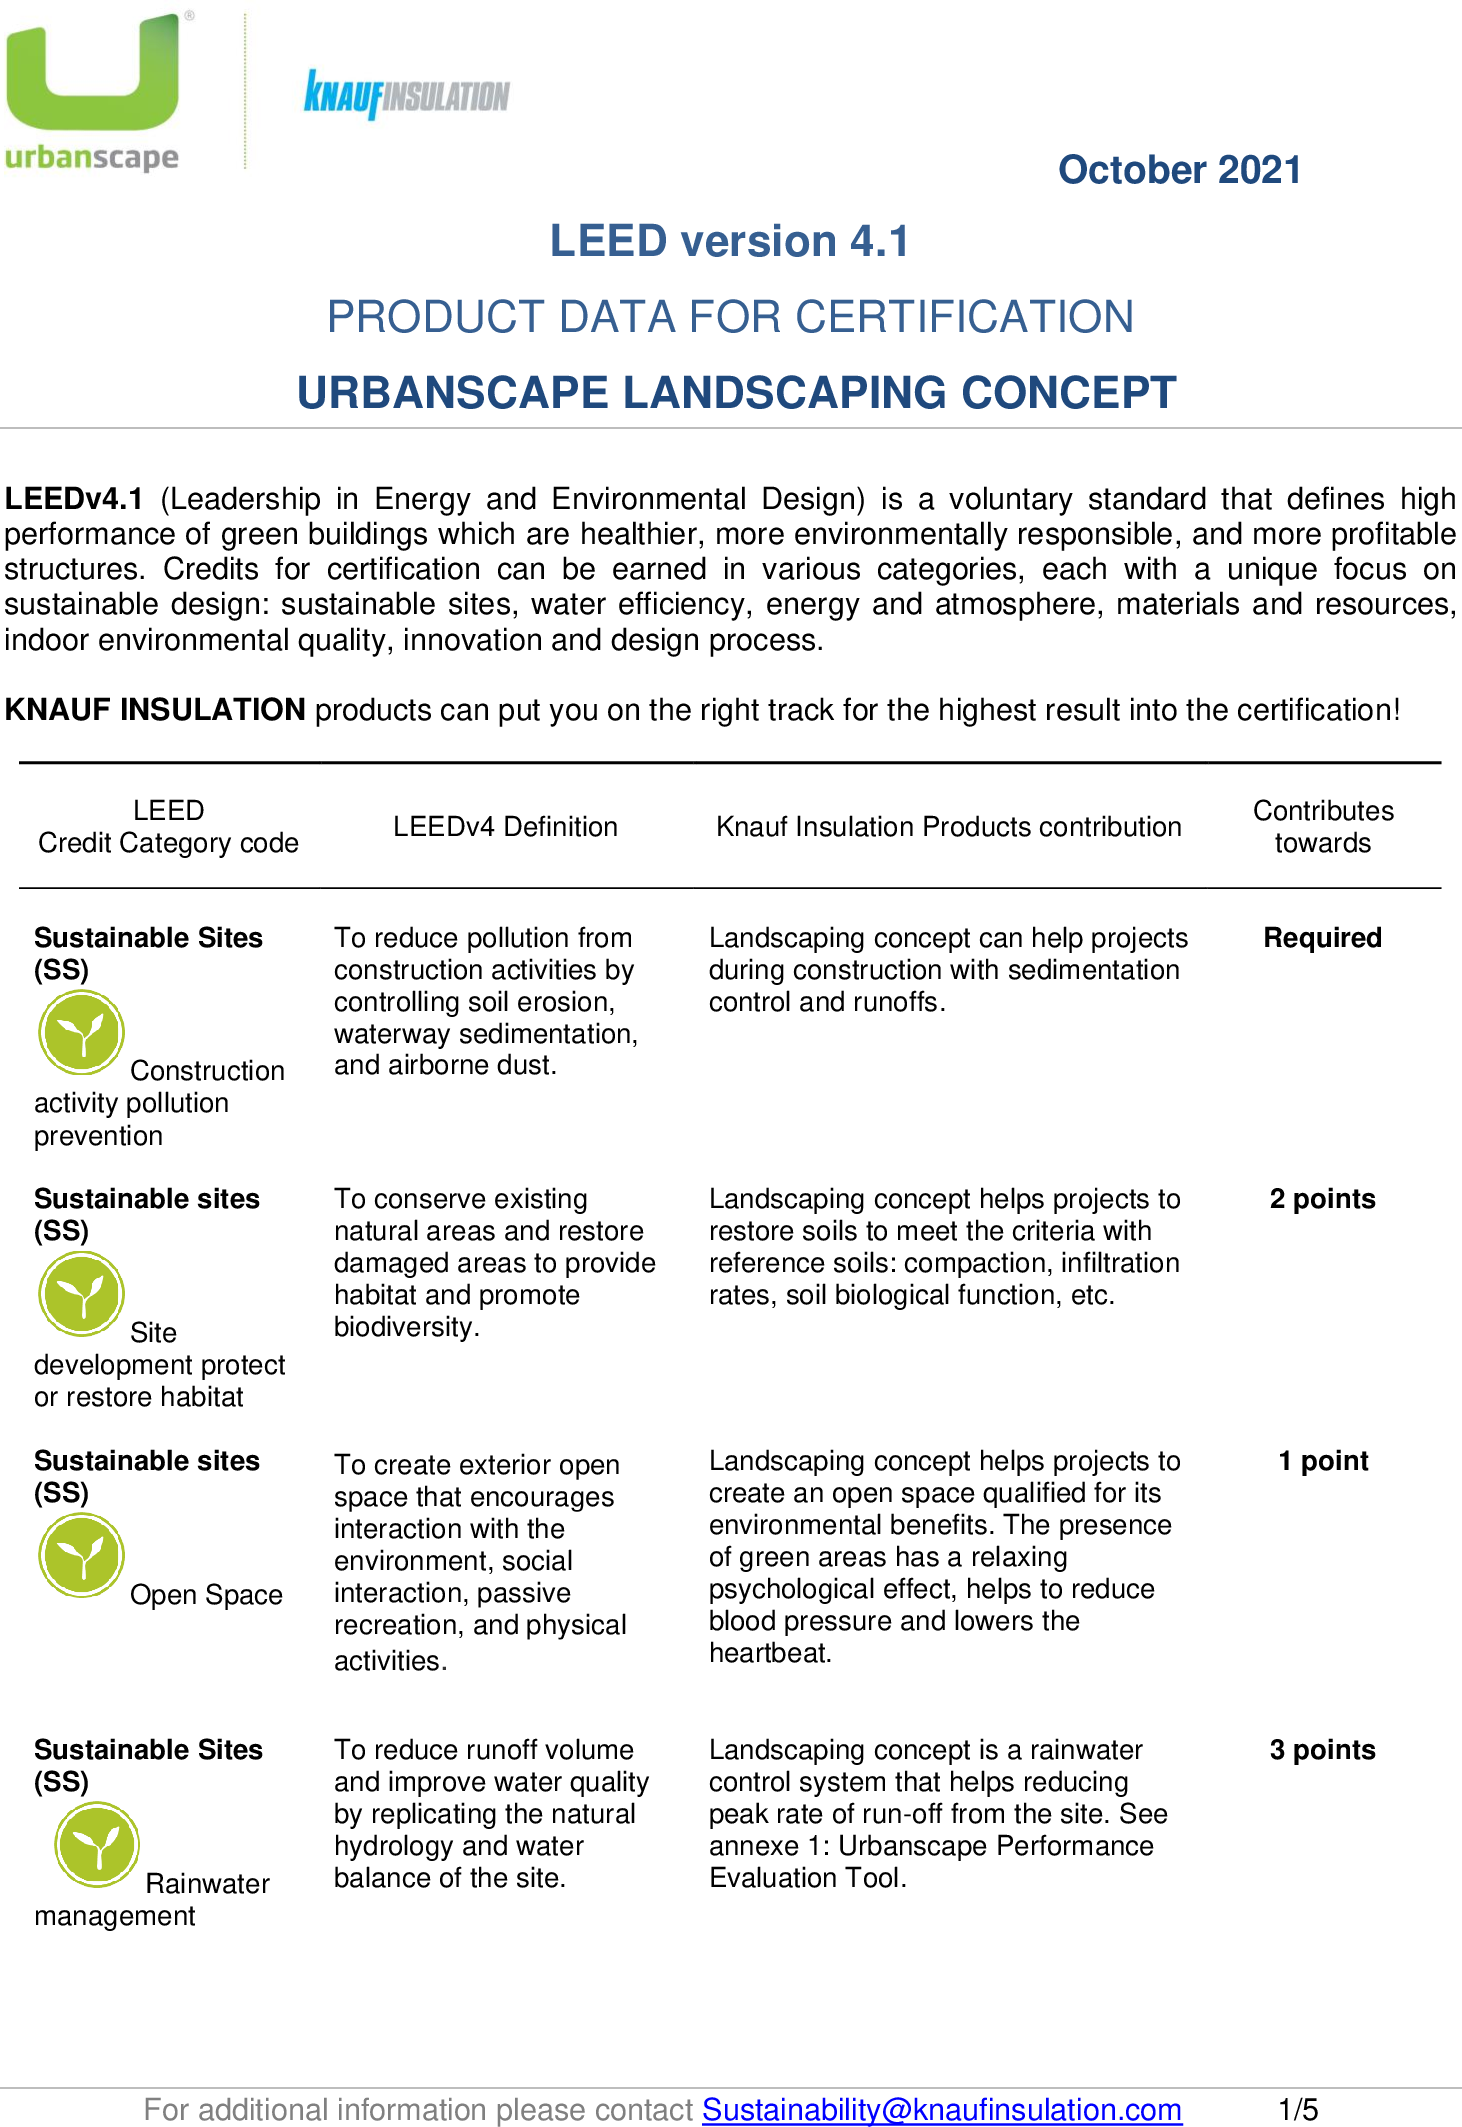 LEED v4.1 compliance Urbanscape Landscaping